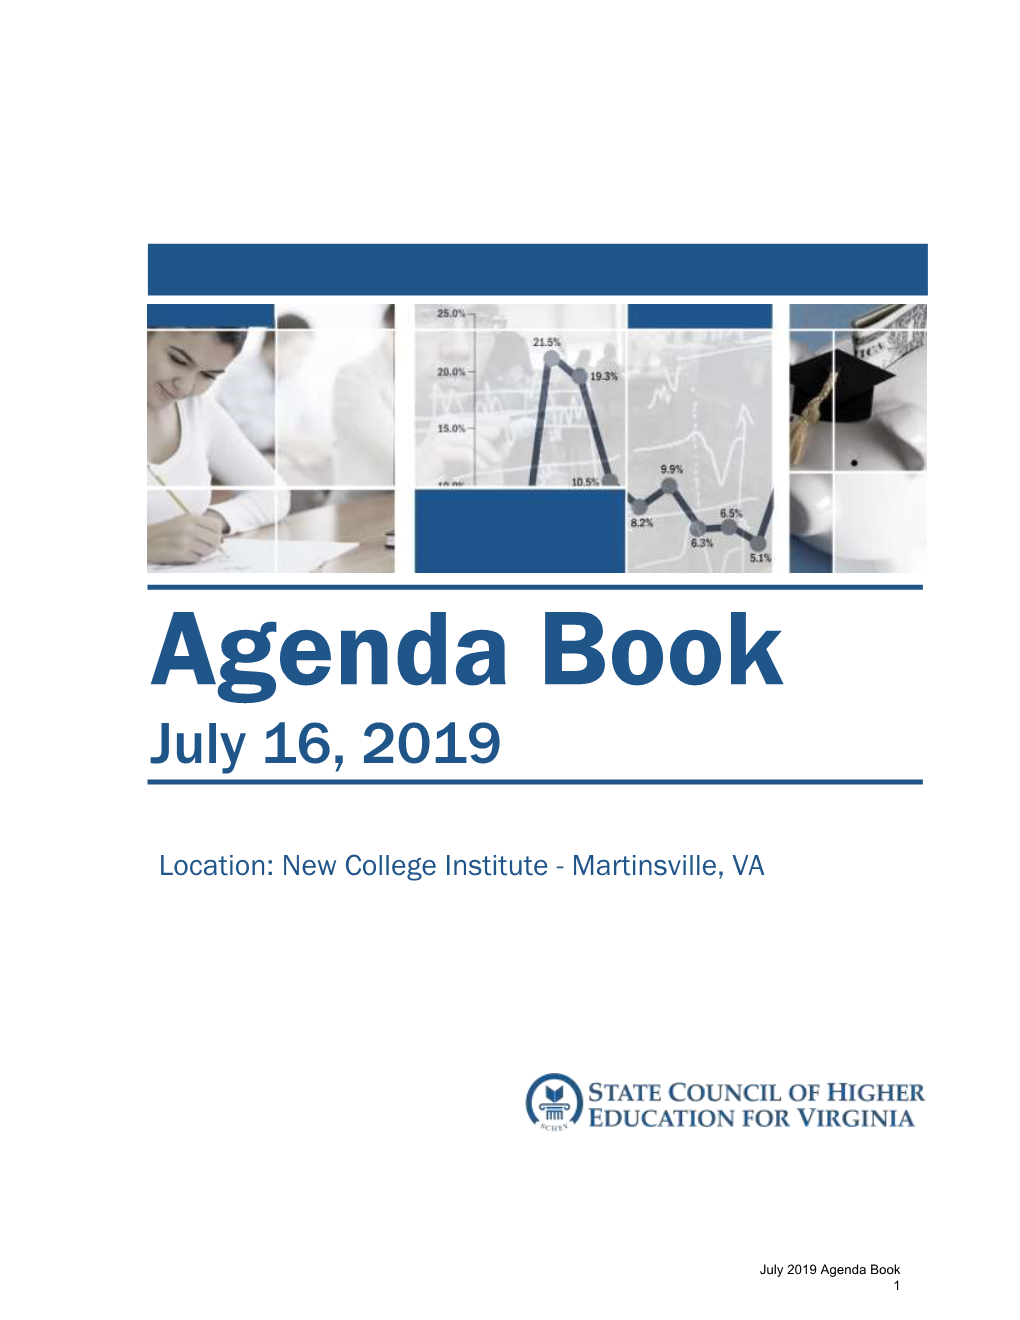 Agenda Book July 16, 2019